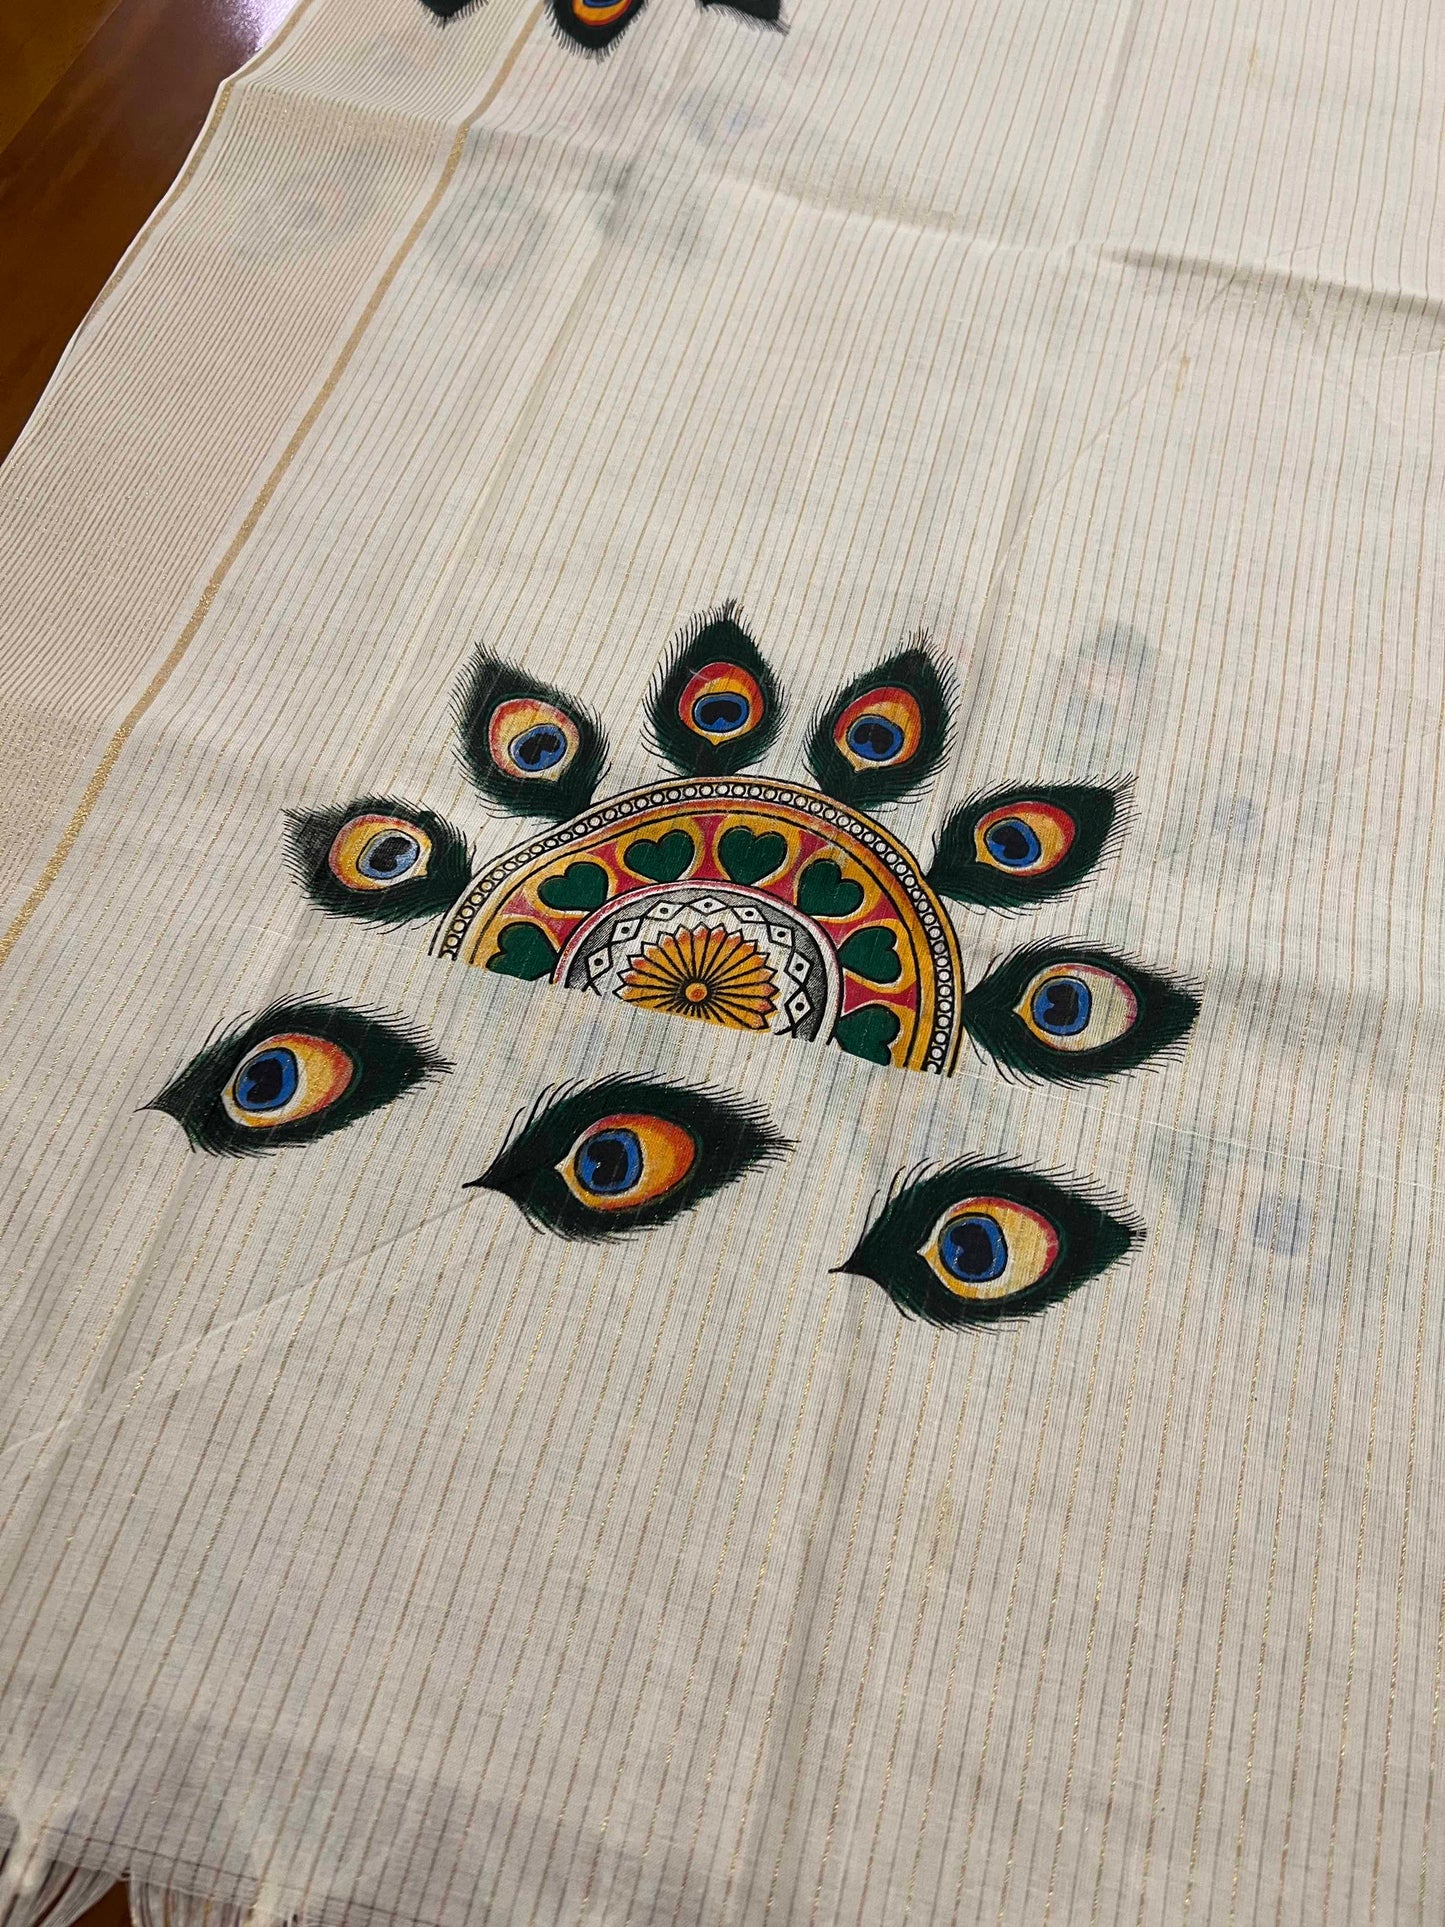 Kerala Tissue Churidar Salwar Material with Mural Printed Peacock Feather Design (include Lines Shawl / Dupatta)